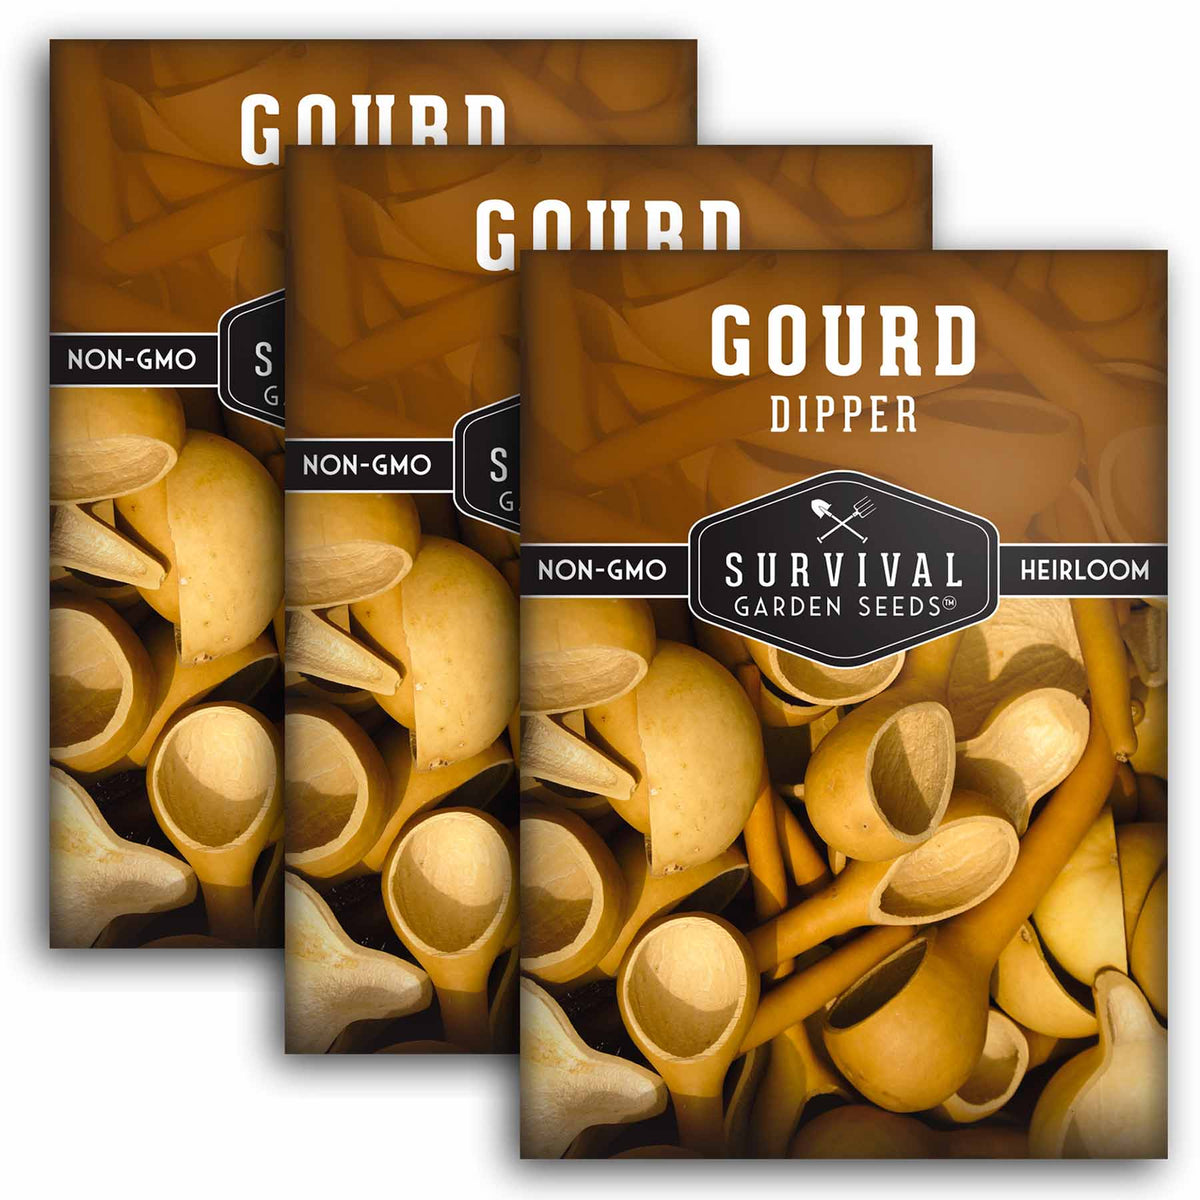 3 packets of Dipper Gourd seeds